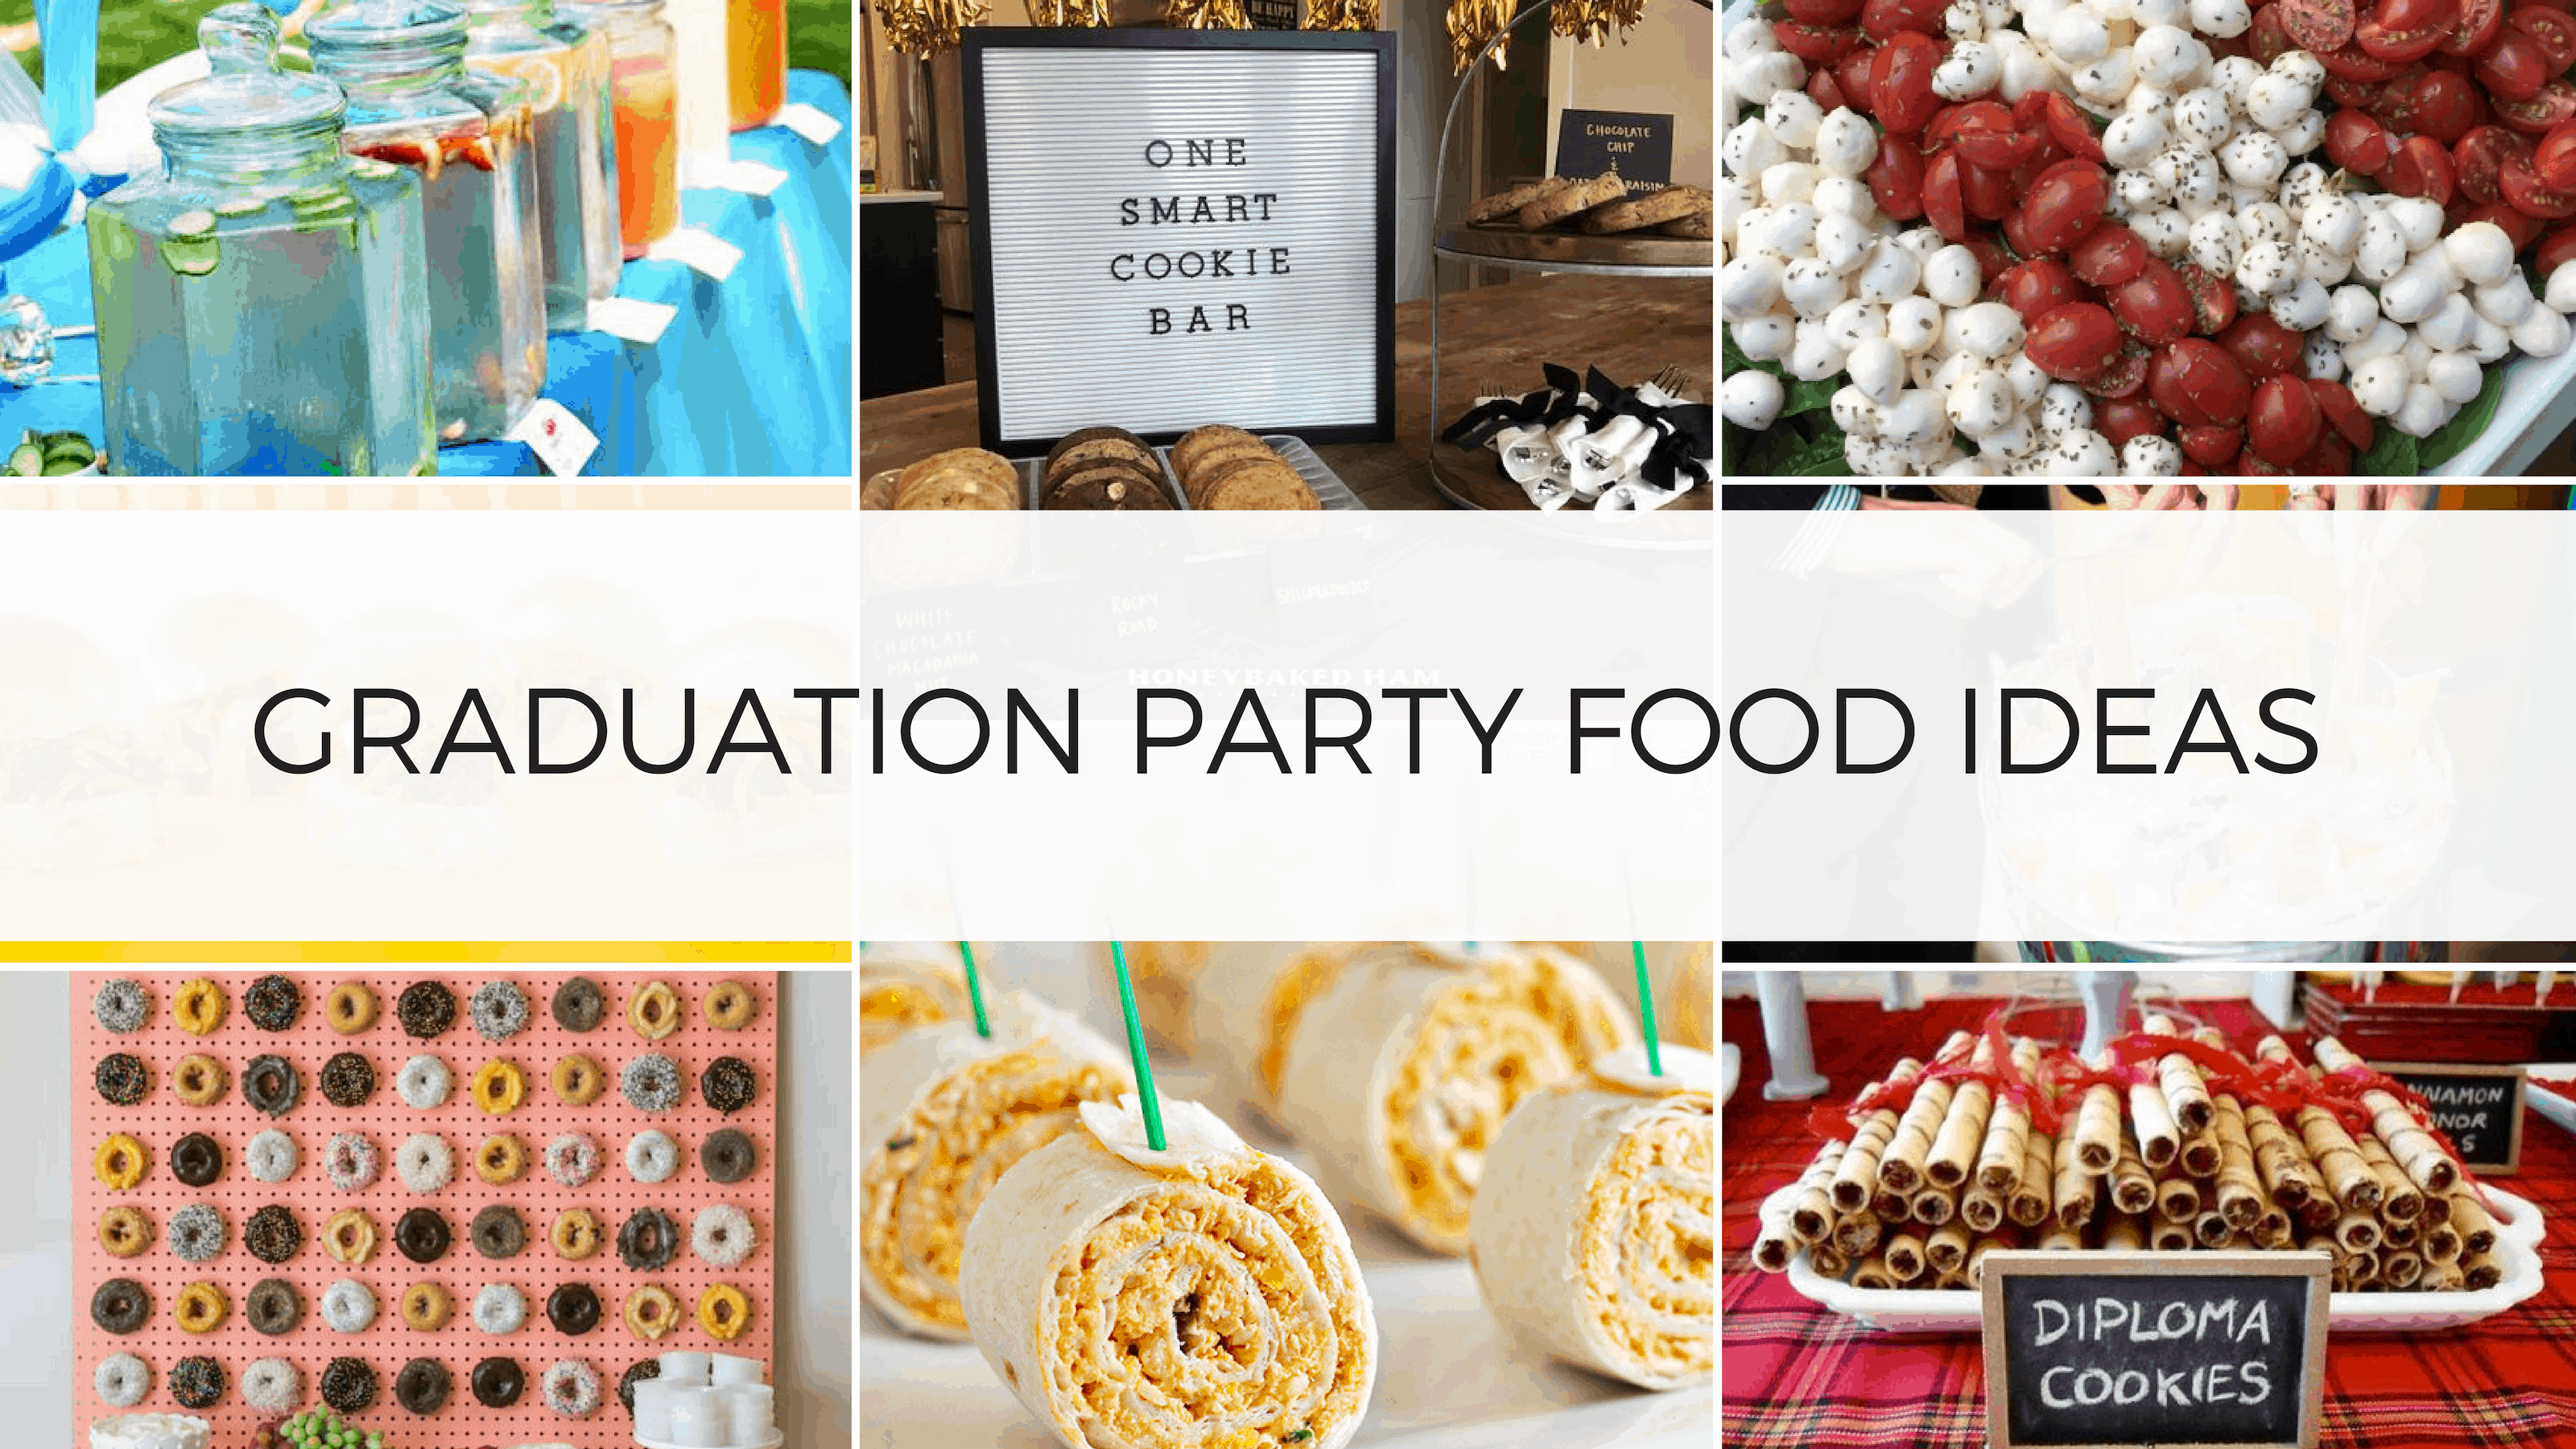 Best Graduation Party Food Ideas 22 Delicious Graduation Party Food Ideas Your Guests Will Love By Sophia Lee